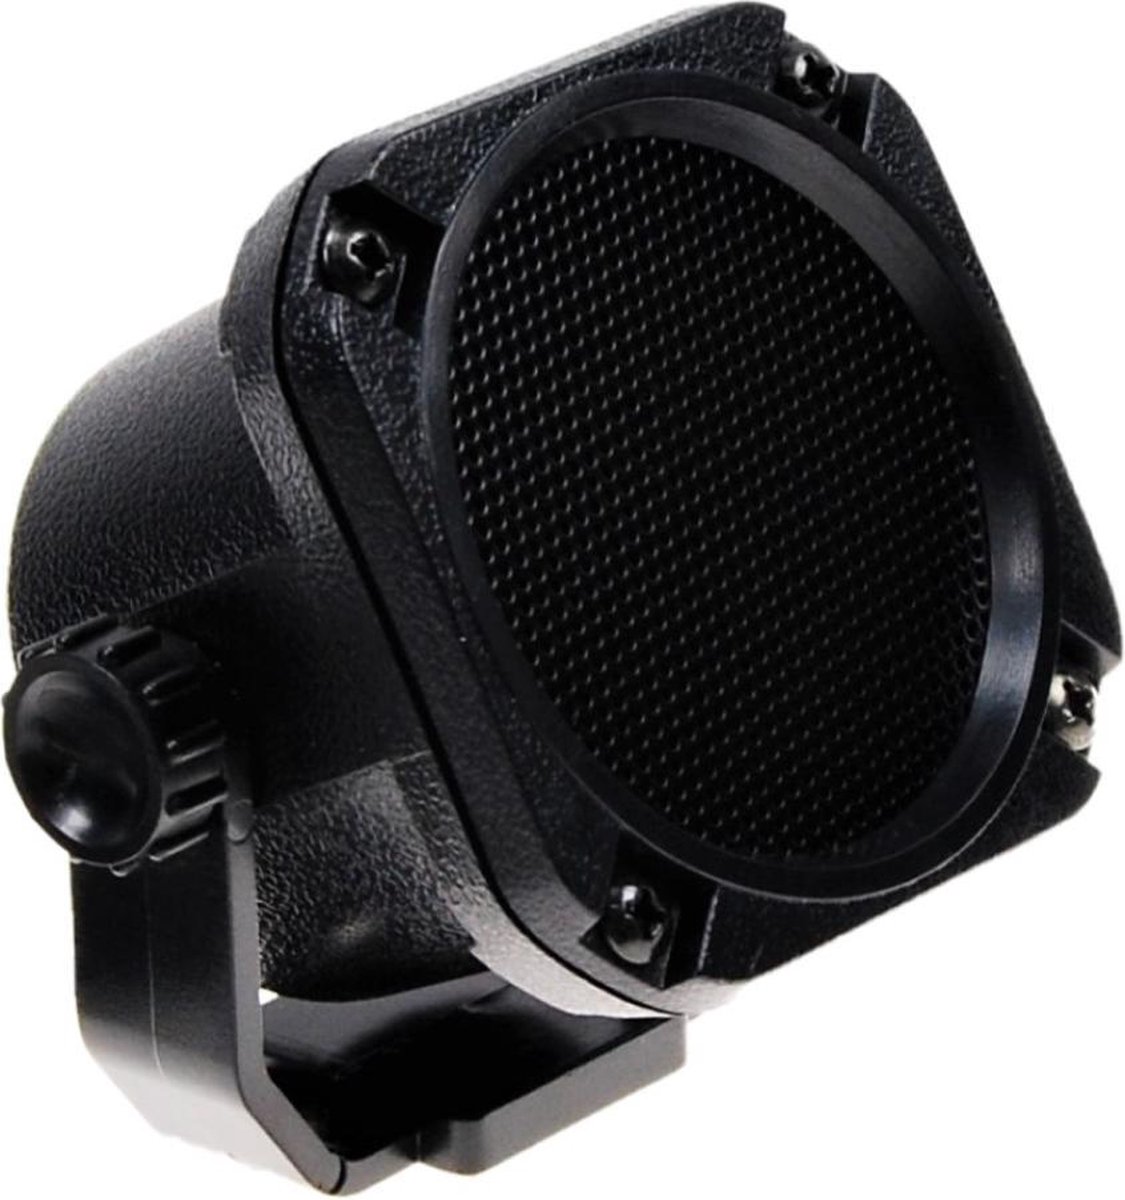 K-PO® CS 538 Externe Luidspreker - CB radio speaker